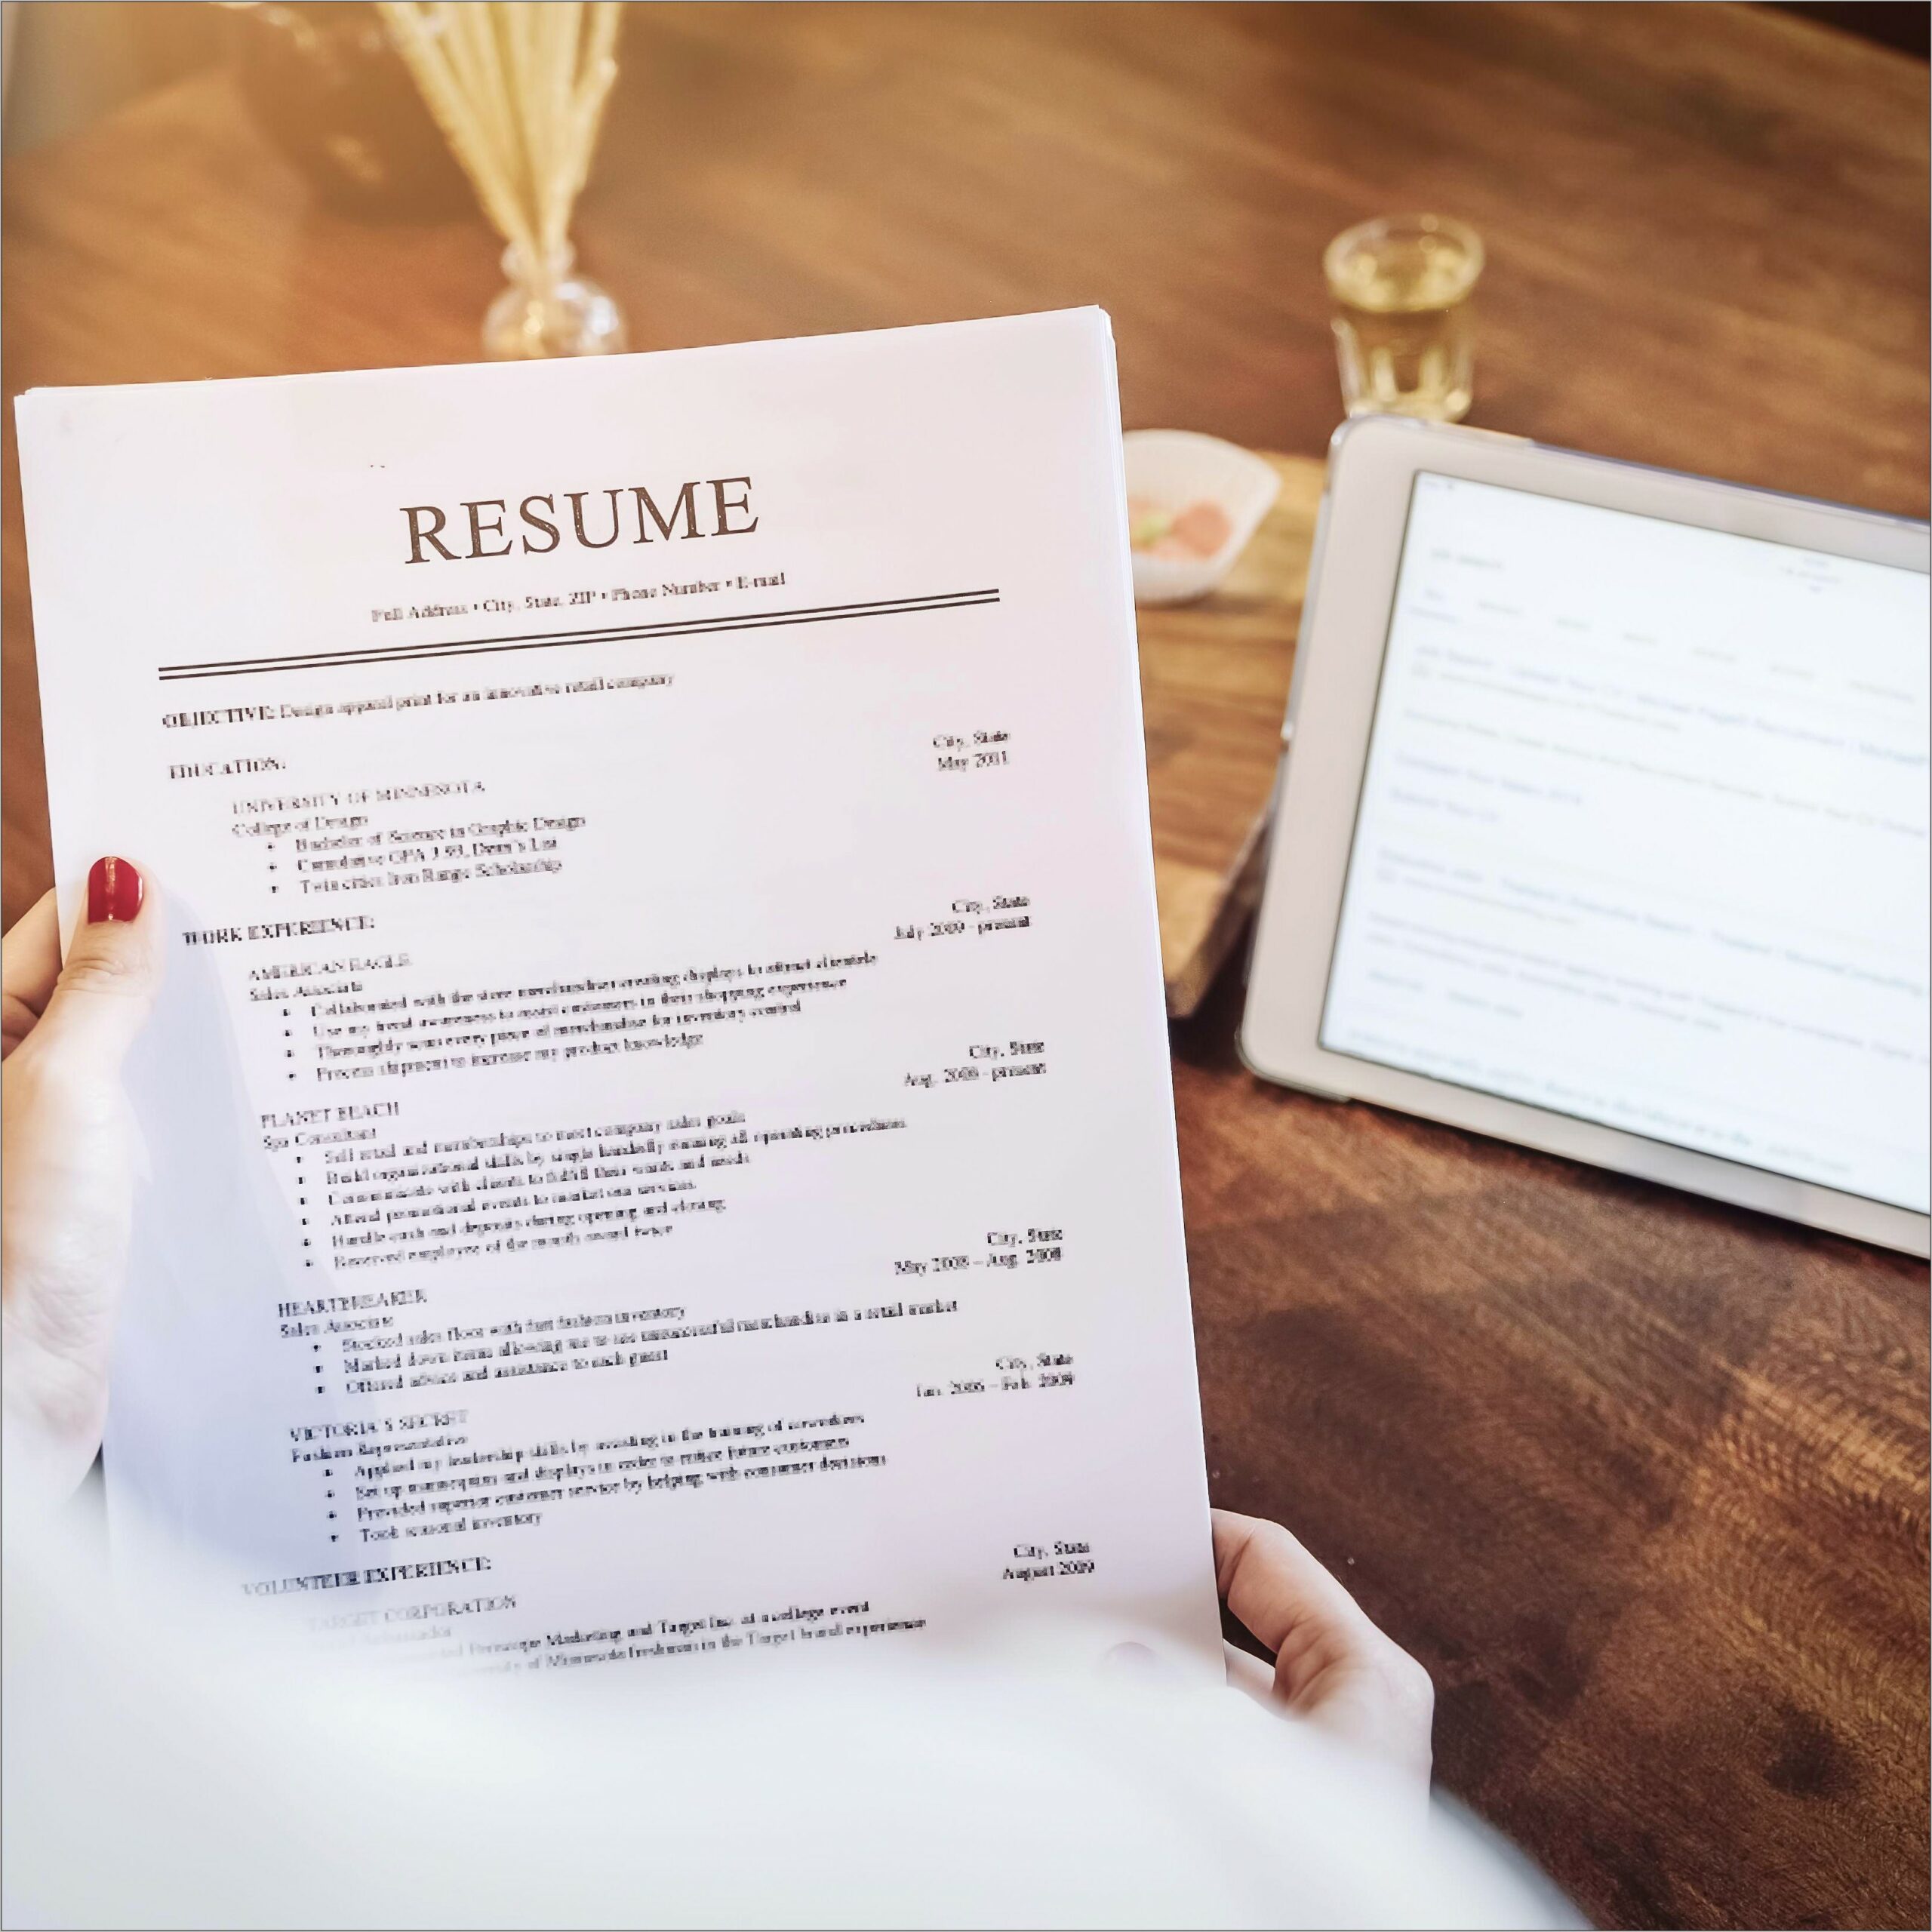 Do You Put Every Job On Federal Resume